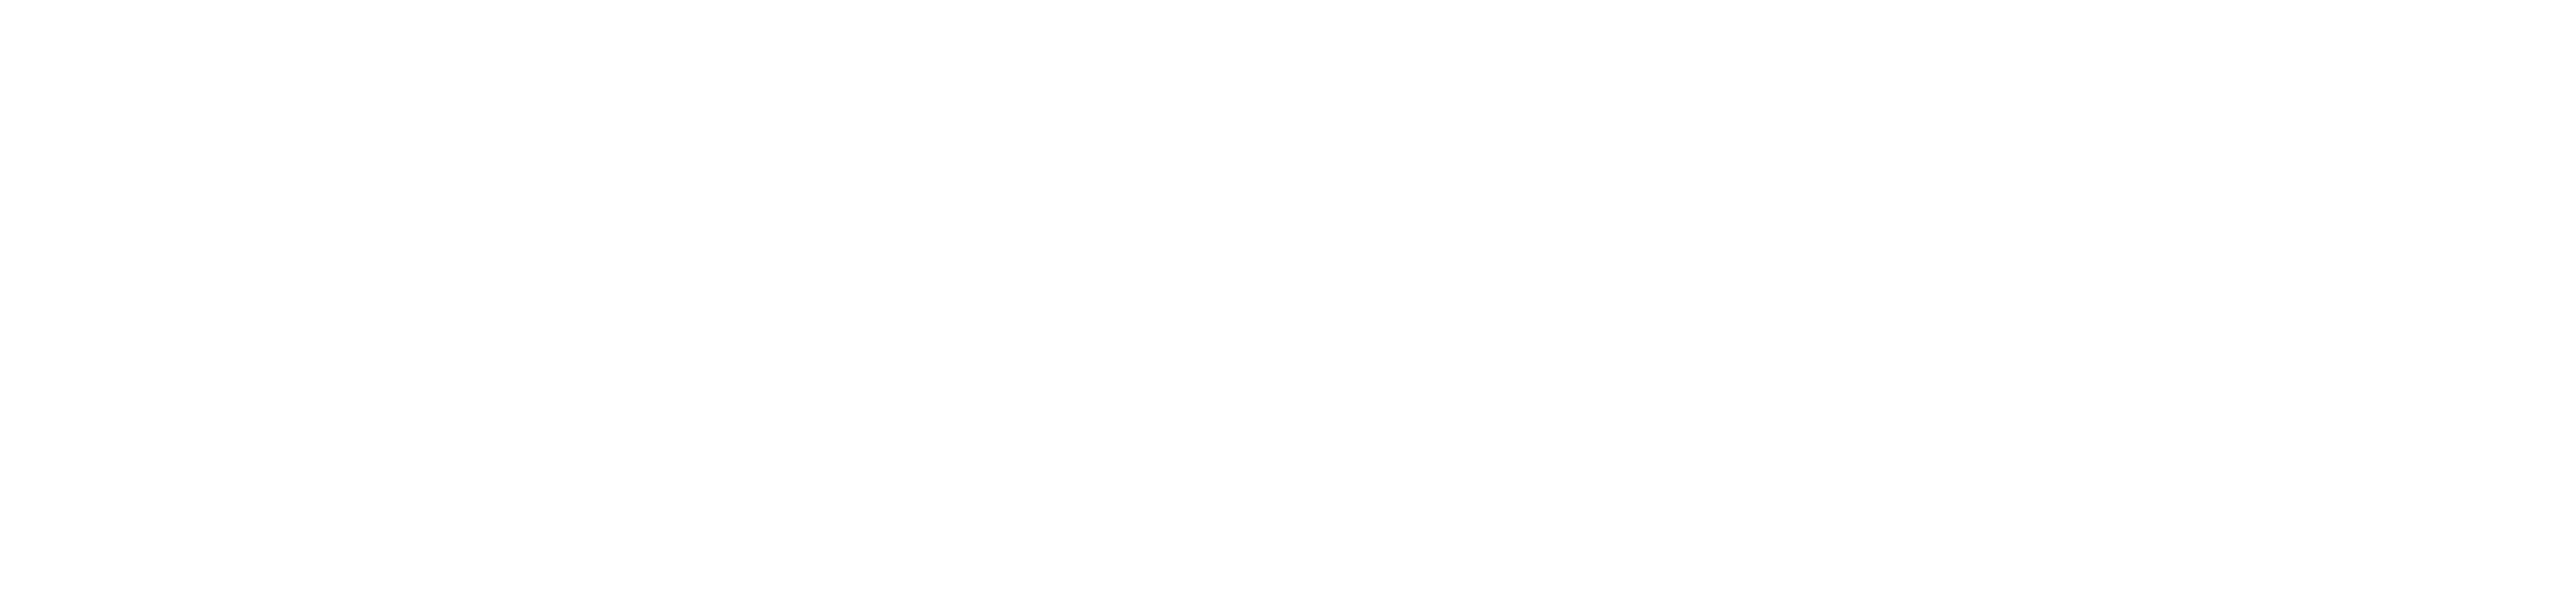 Michigan Farmers Union